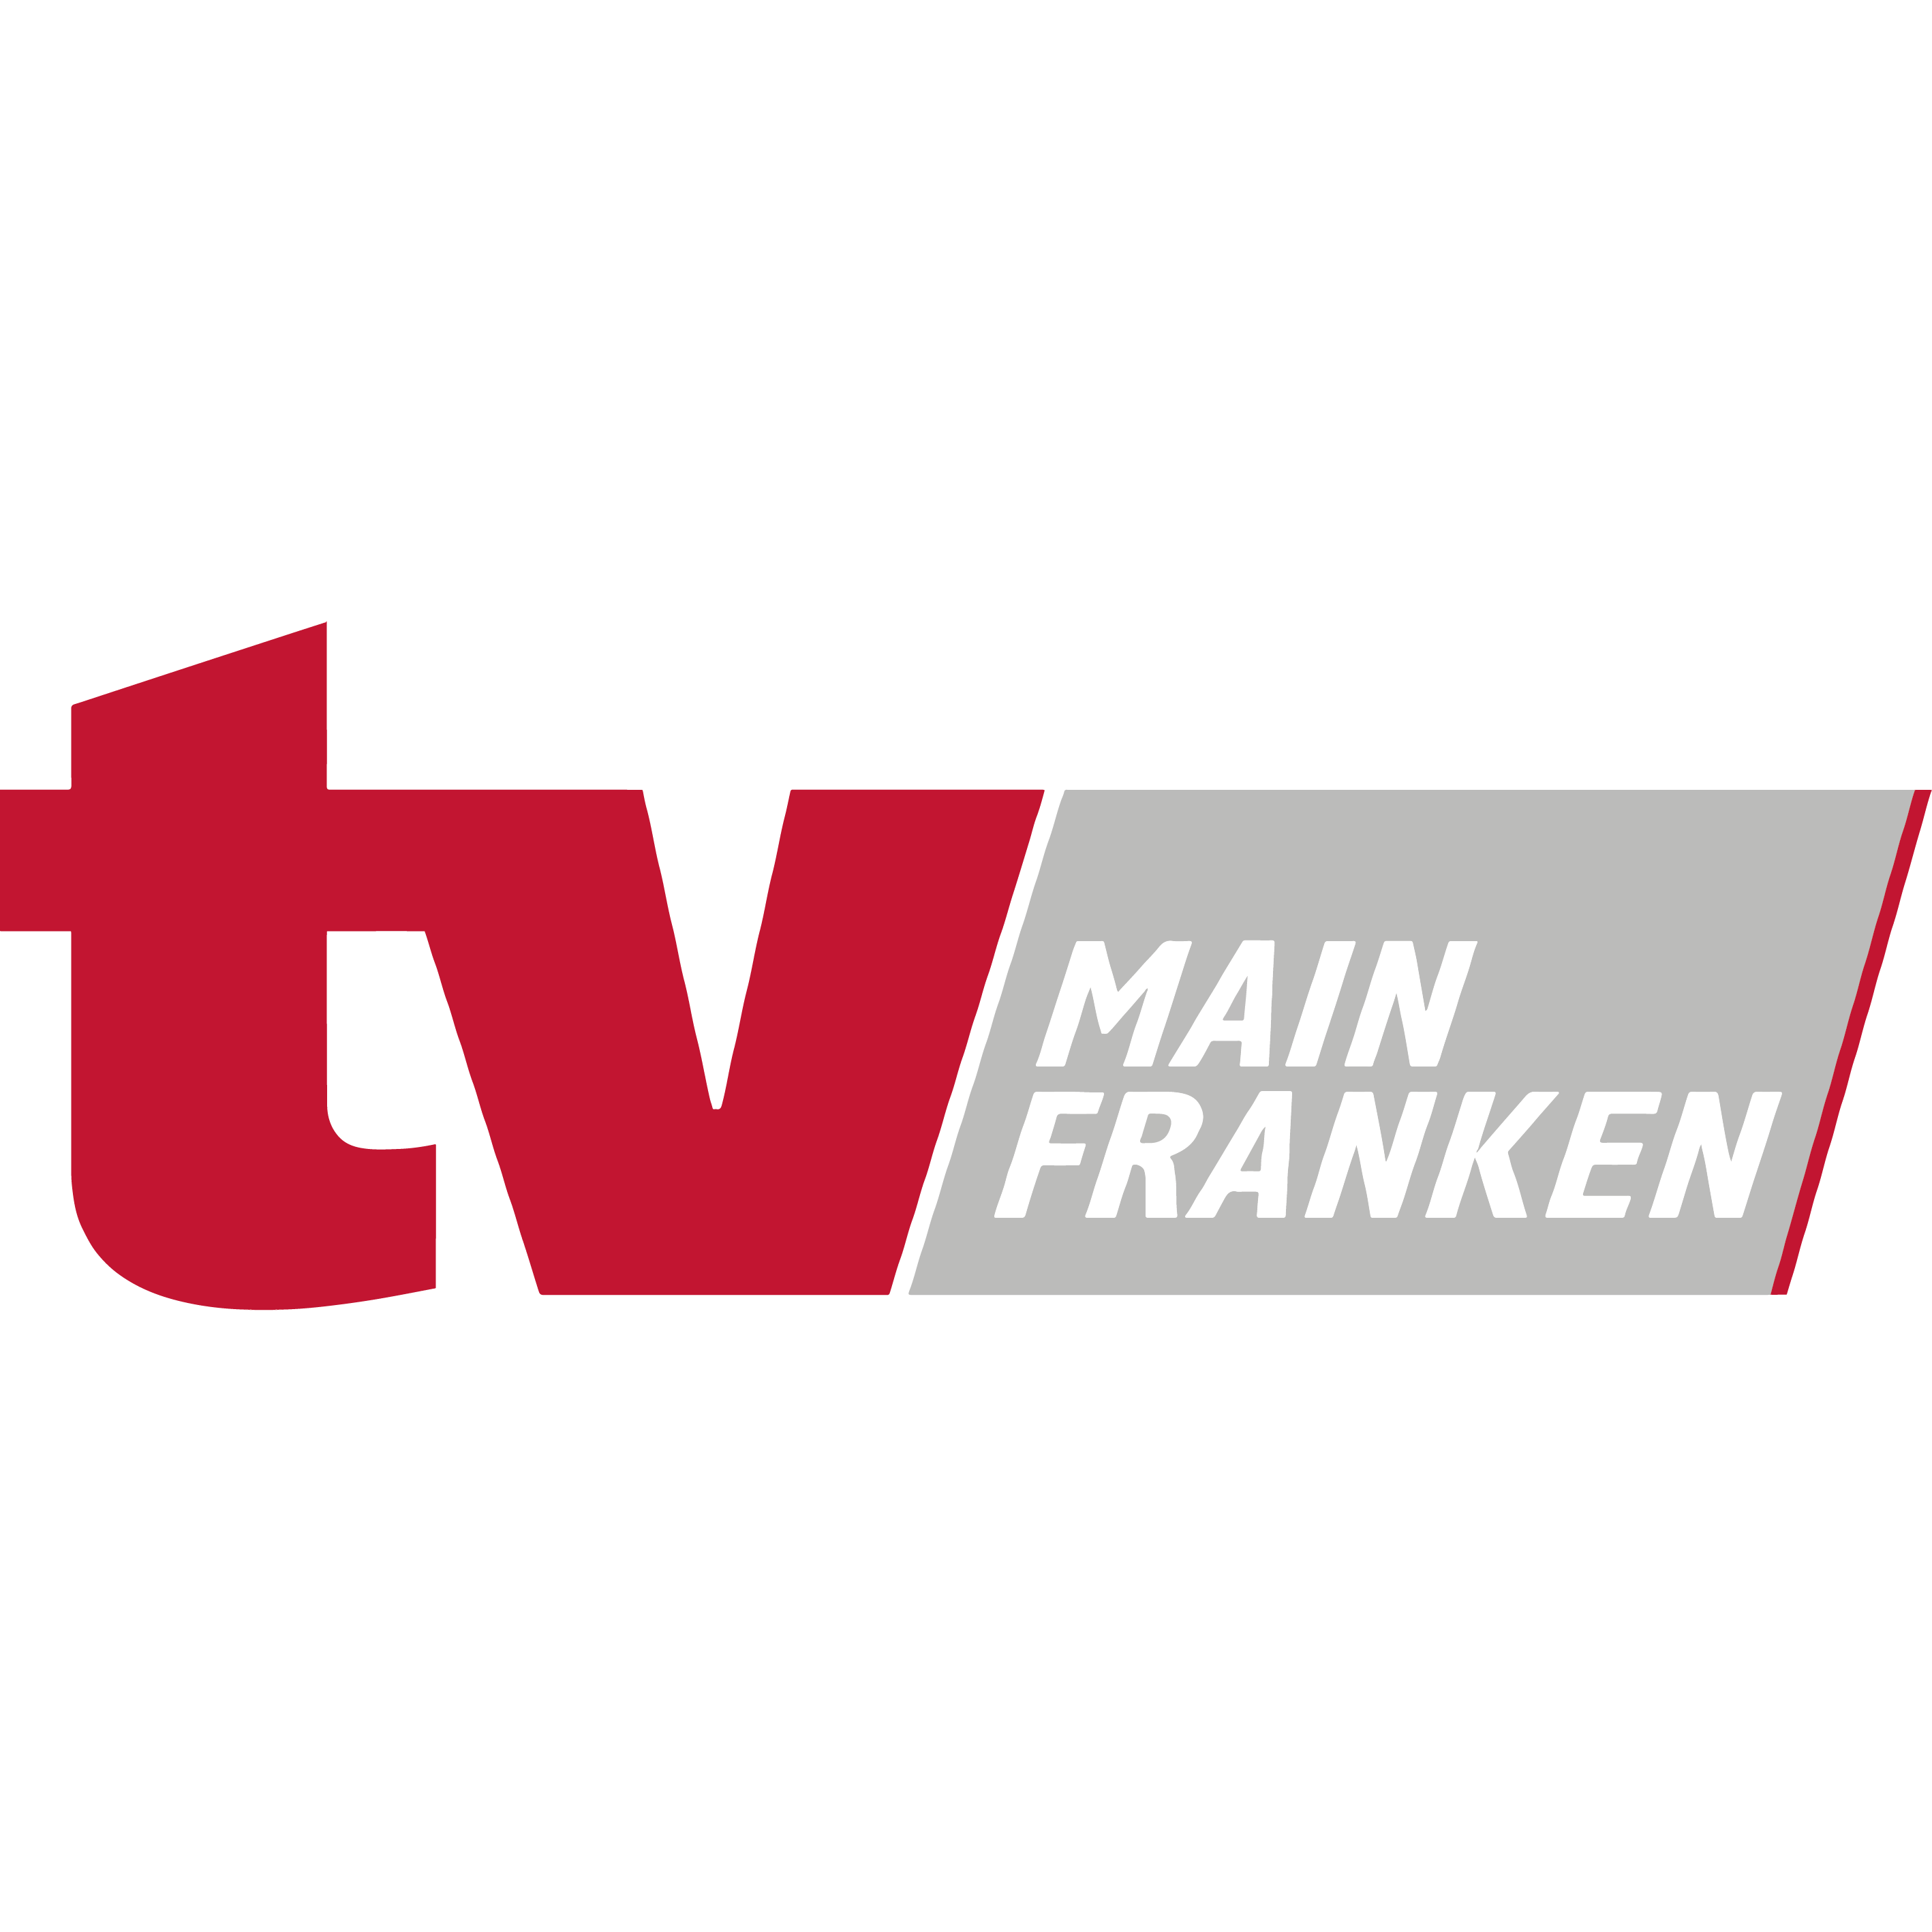 <a href="https://www.tvmainfranken.de/dachstuhlbrand-in-zellingen-brandursache-unklar-275411/">TV Mainfranken Artikel</a>